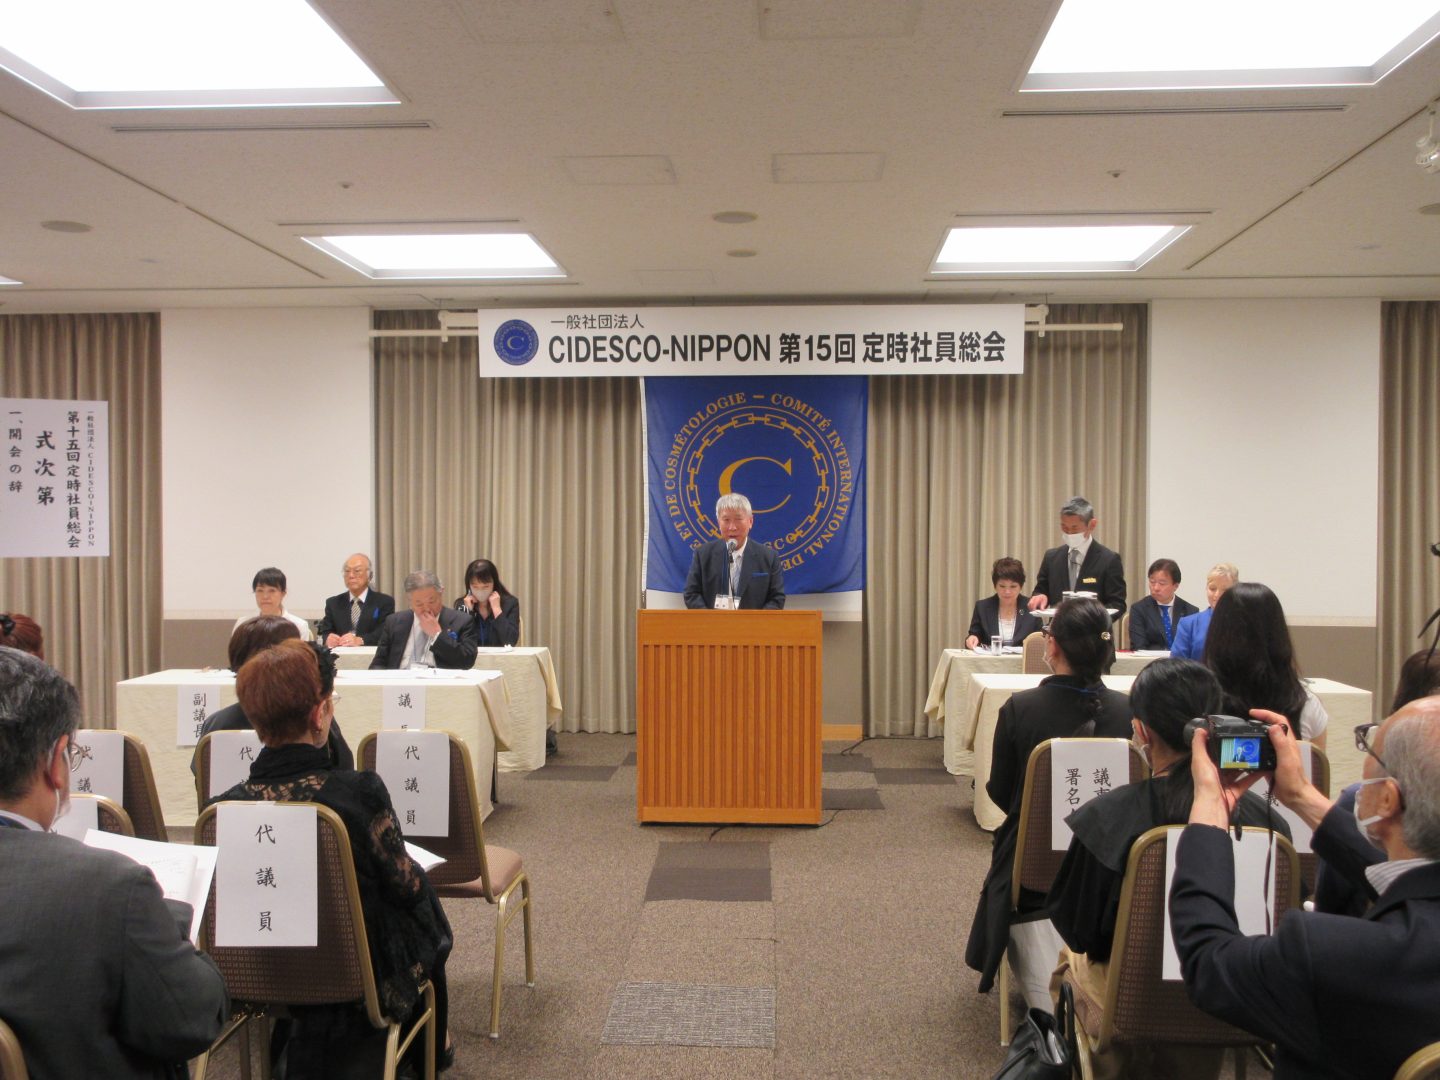 一般社団法人CIDESCO-NIPPON（古武一成代表理事）は、6月12日(月)に「第15回定時社員総会」を開催